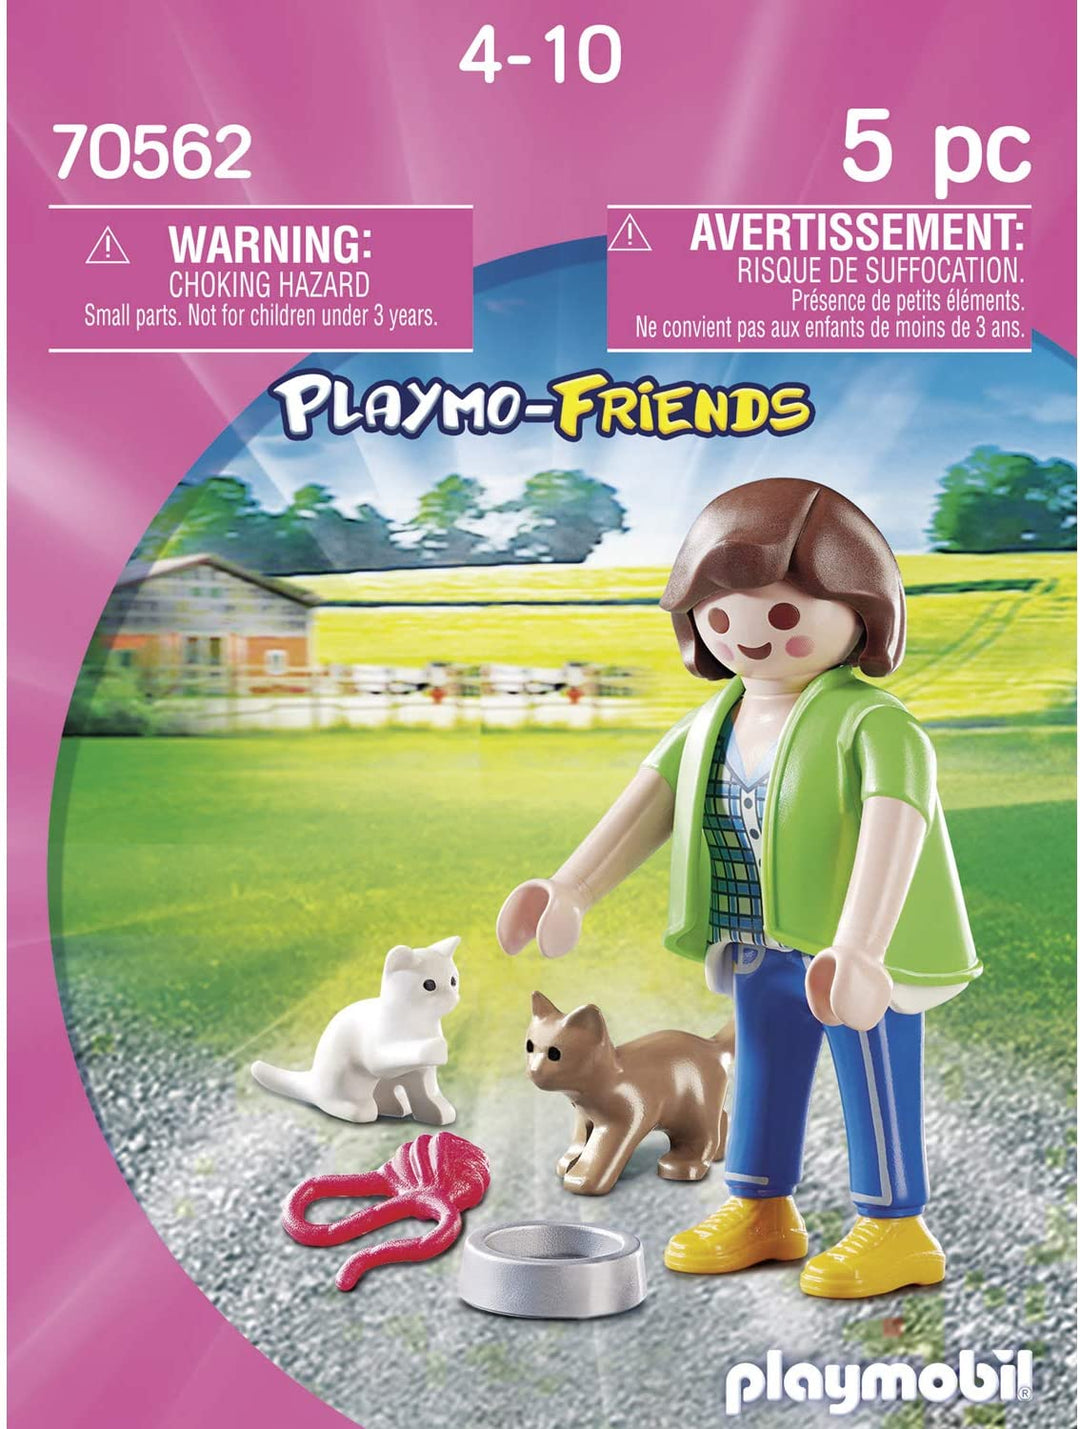 Playmobil 70562 Playmo-Friends Boy mit RC Car, für Kinder ab 4 Jahren